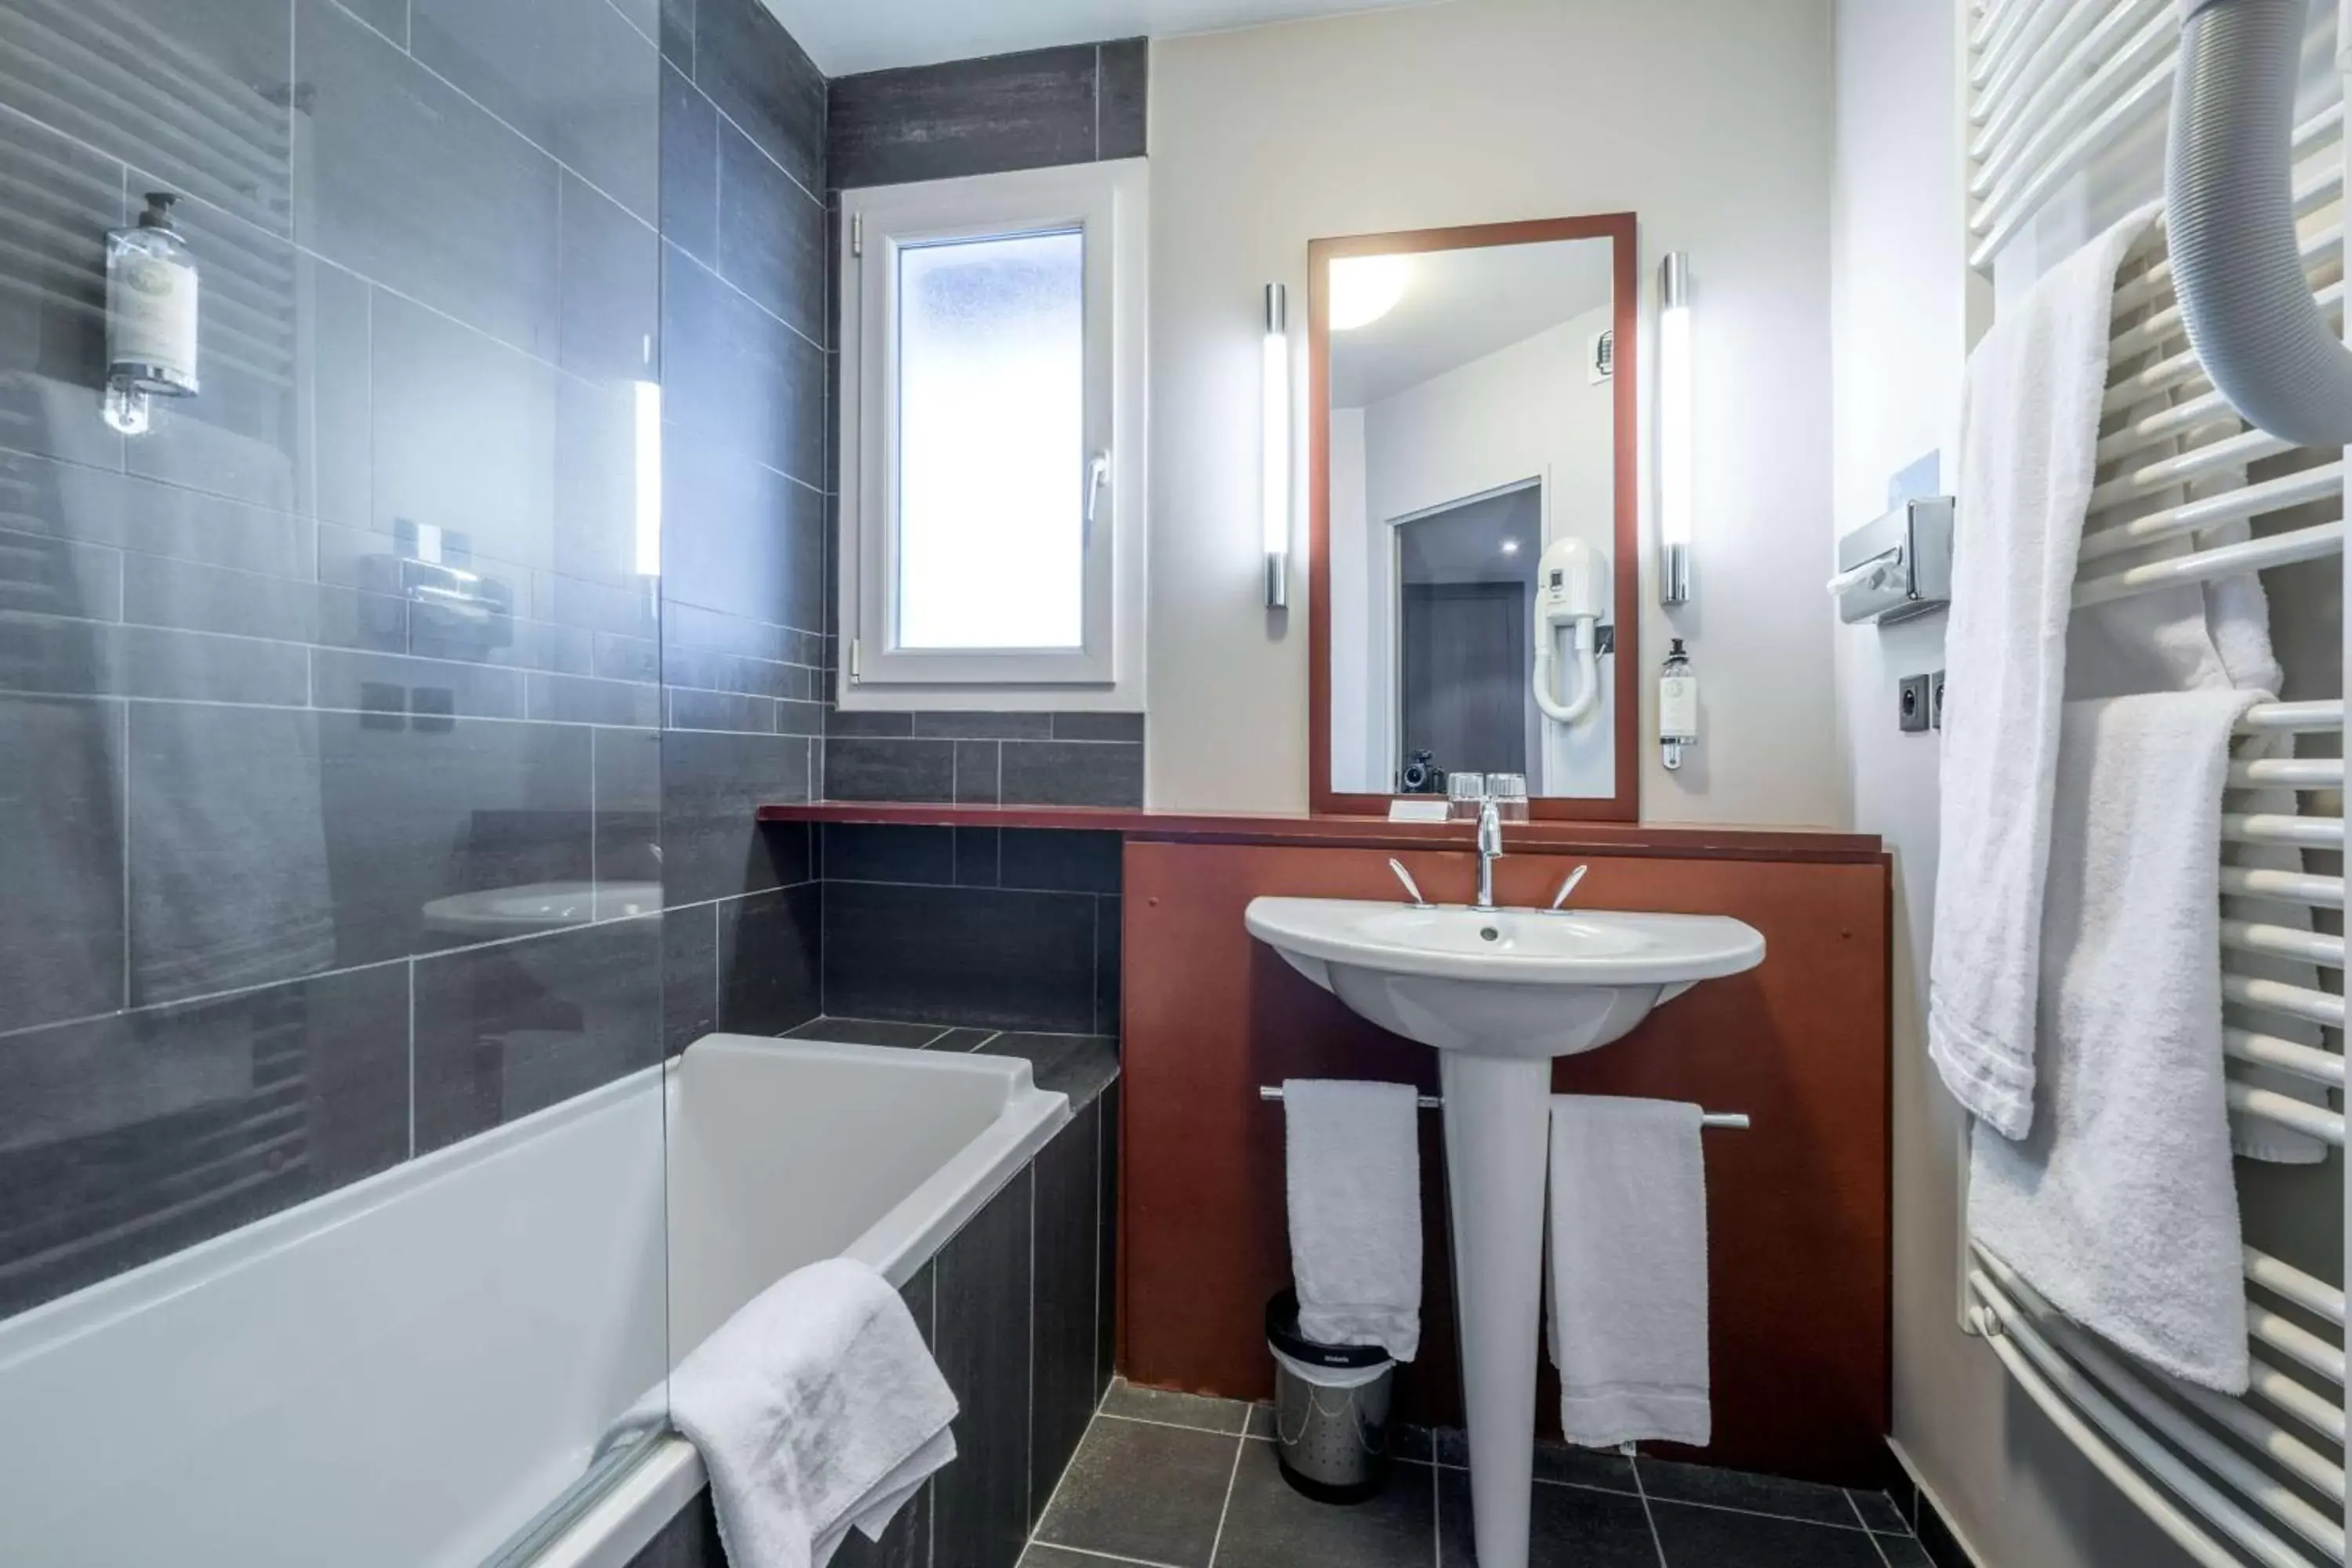 Photo of the whole room, Bathroom in Best Western Plus Hotel Gergovie